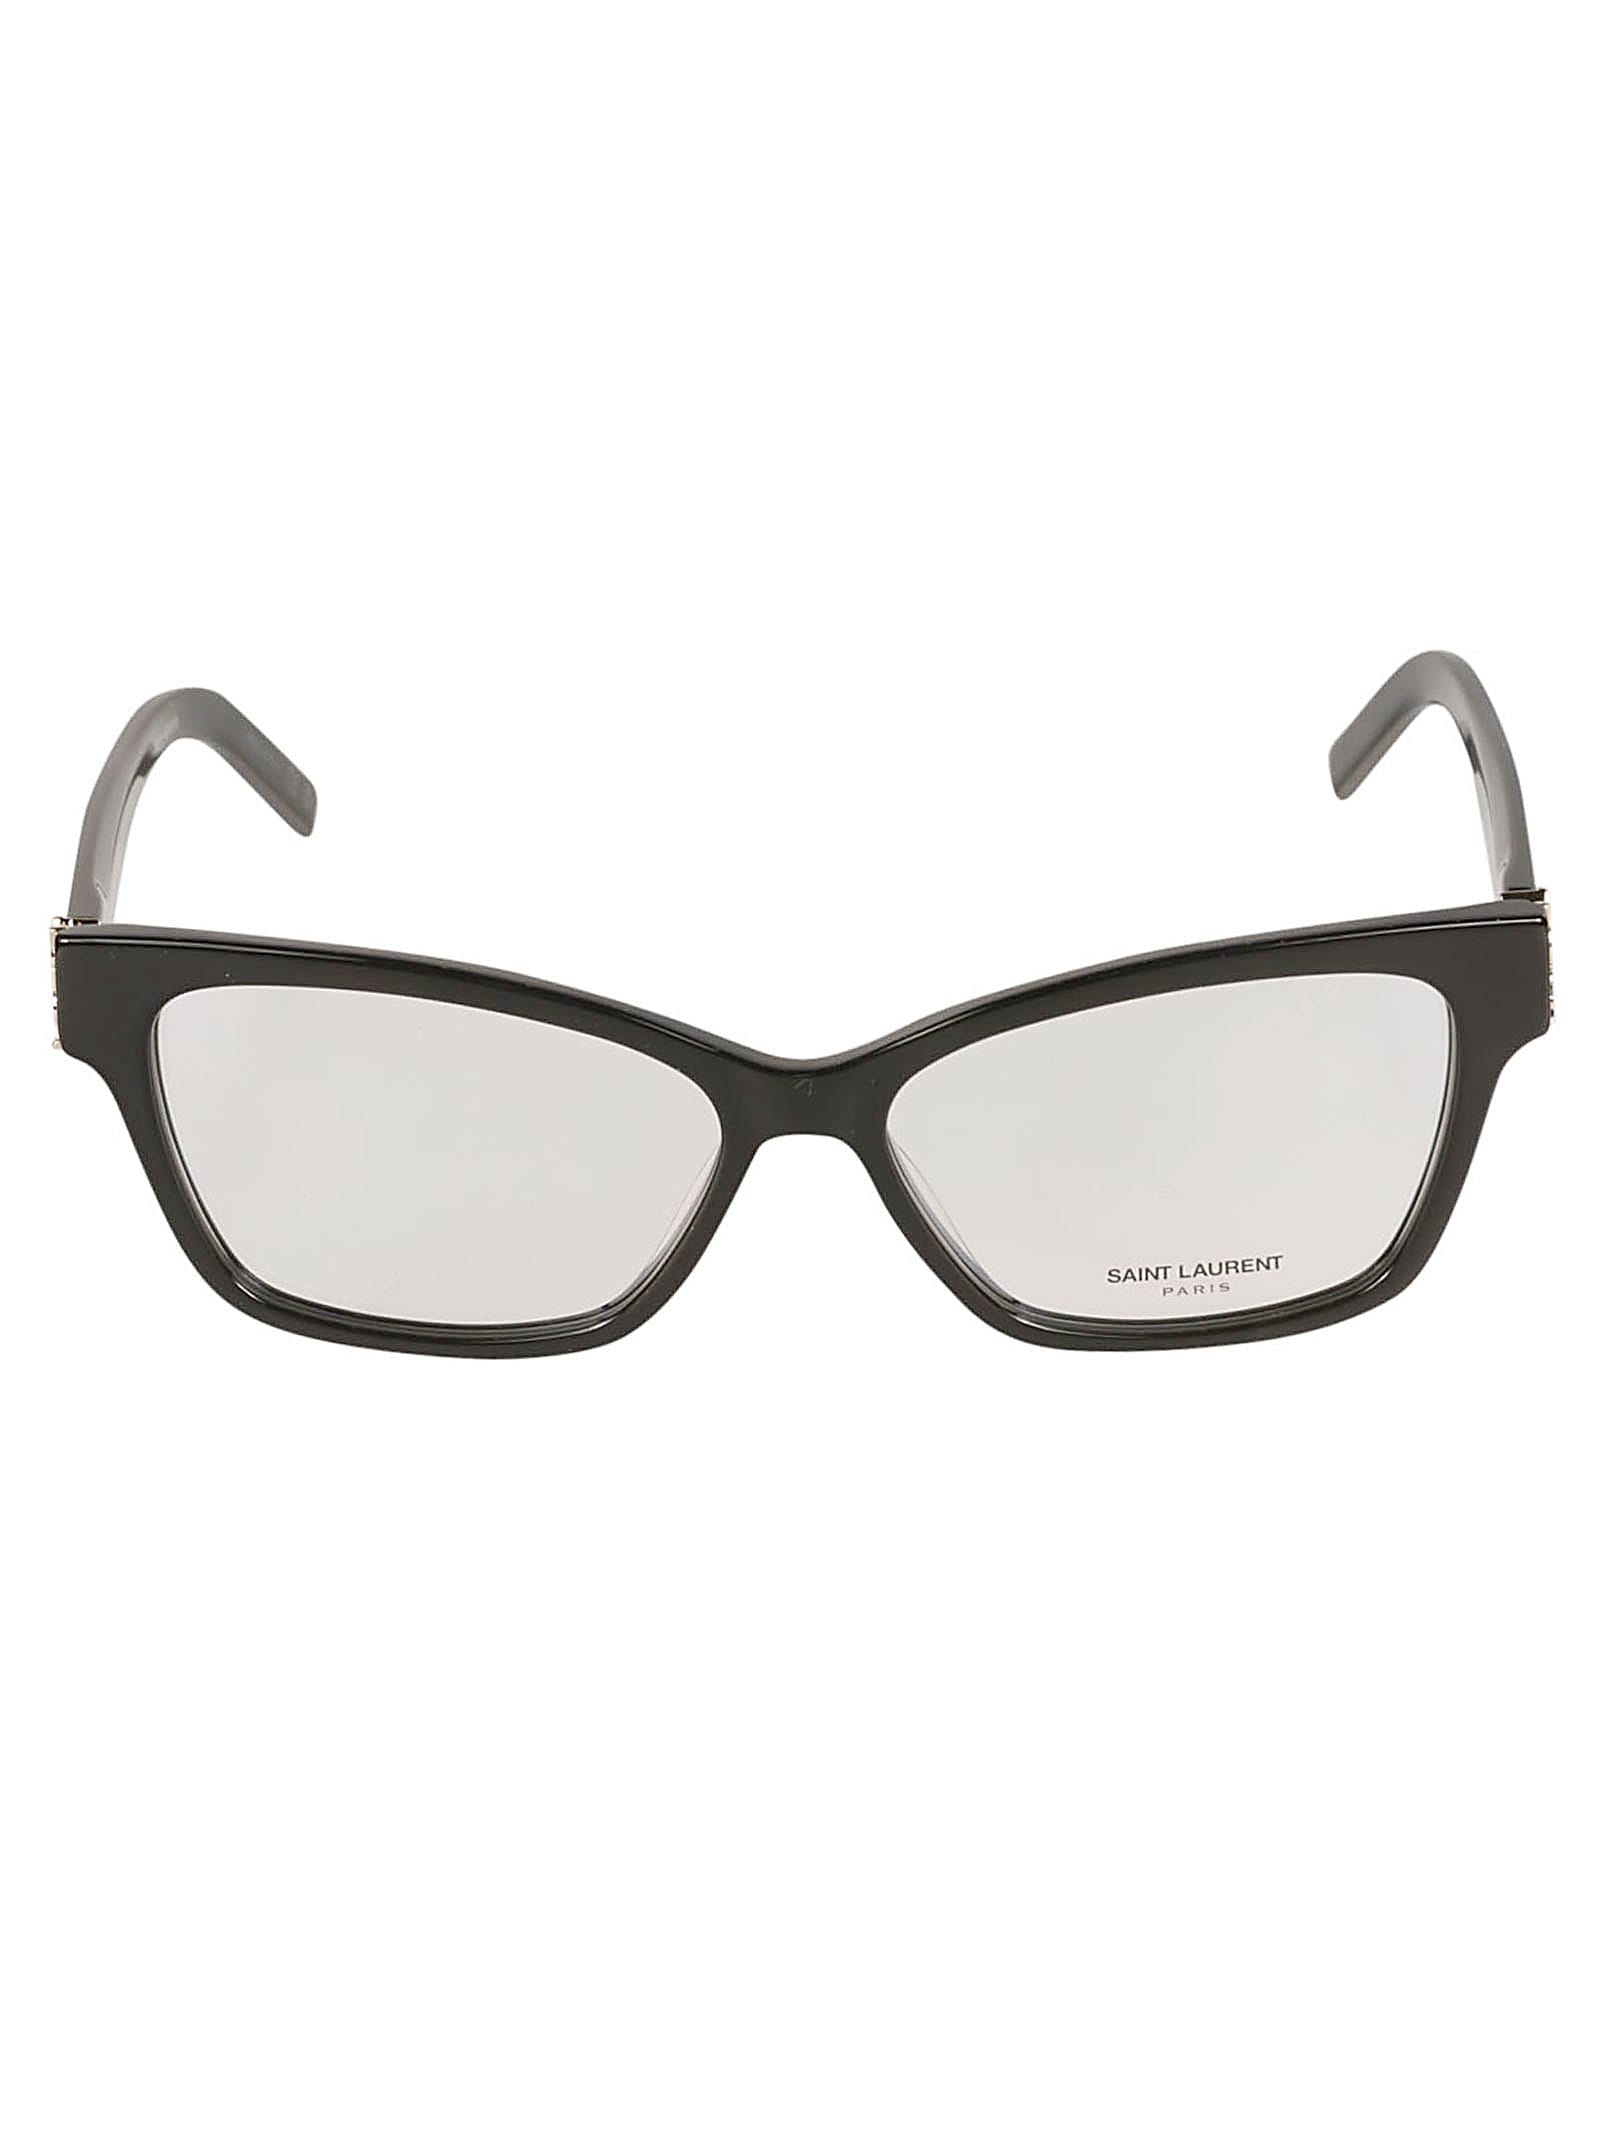 Saint Laurent Ysl Hinge Butterfly Frame Glasses In Black/transparent